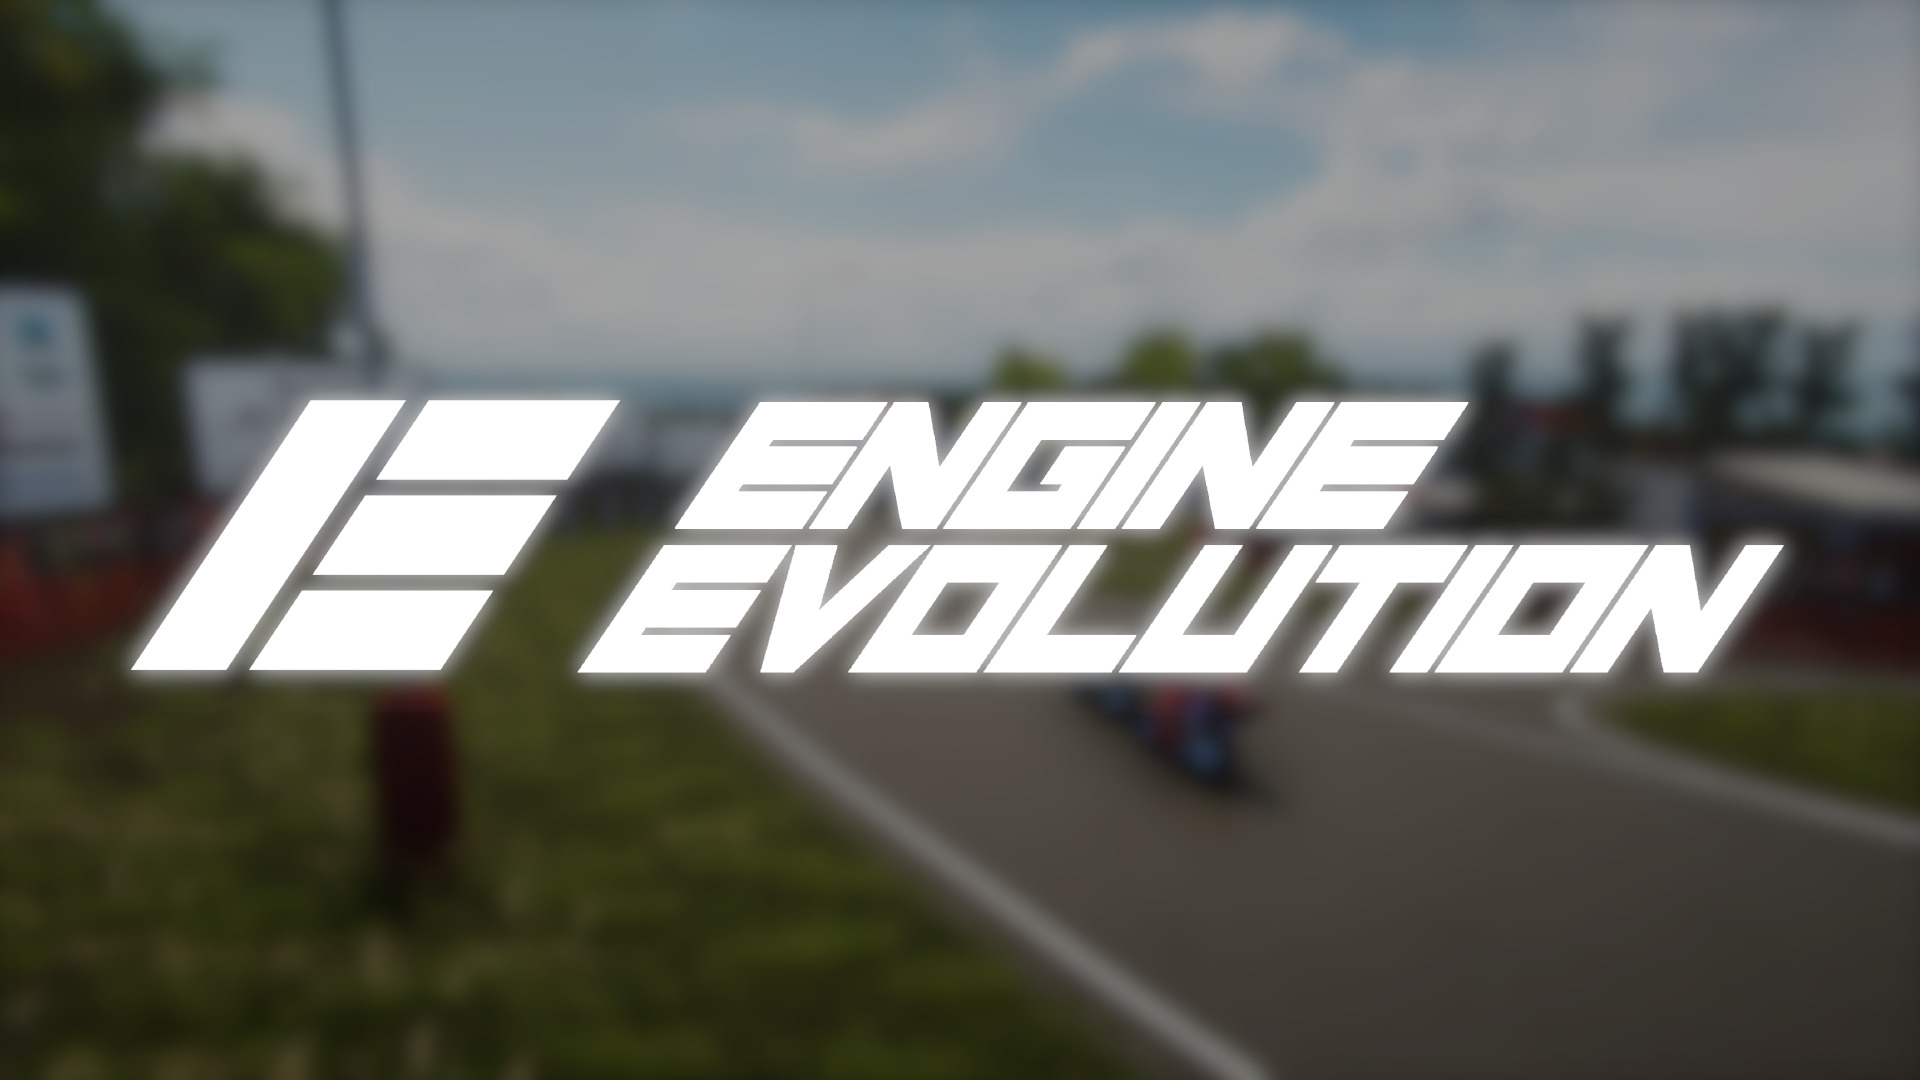 engineEvolutionBackground004.png